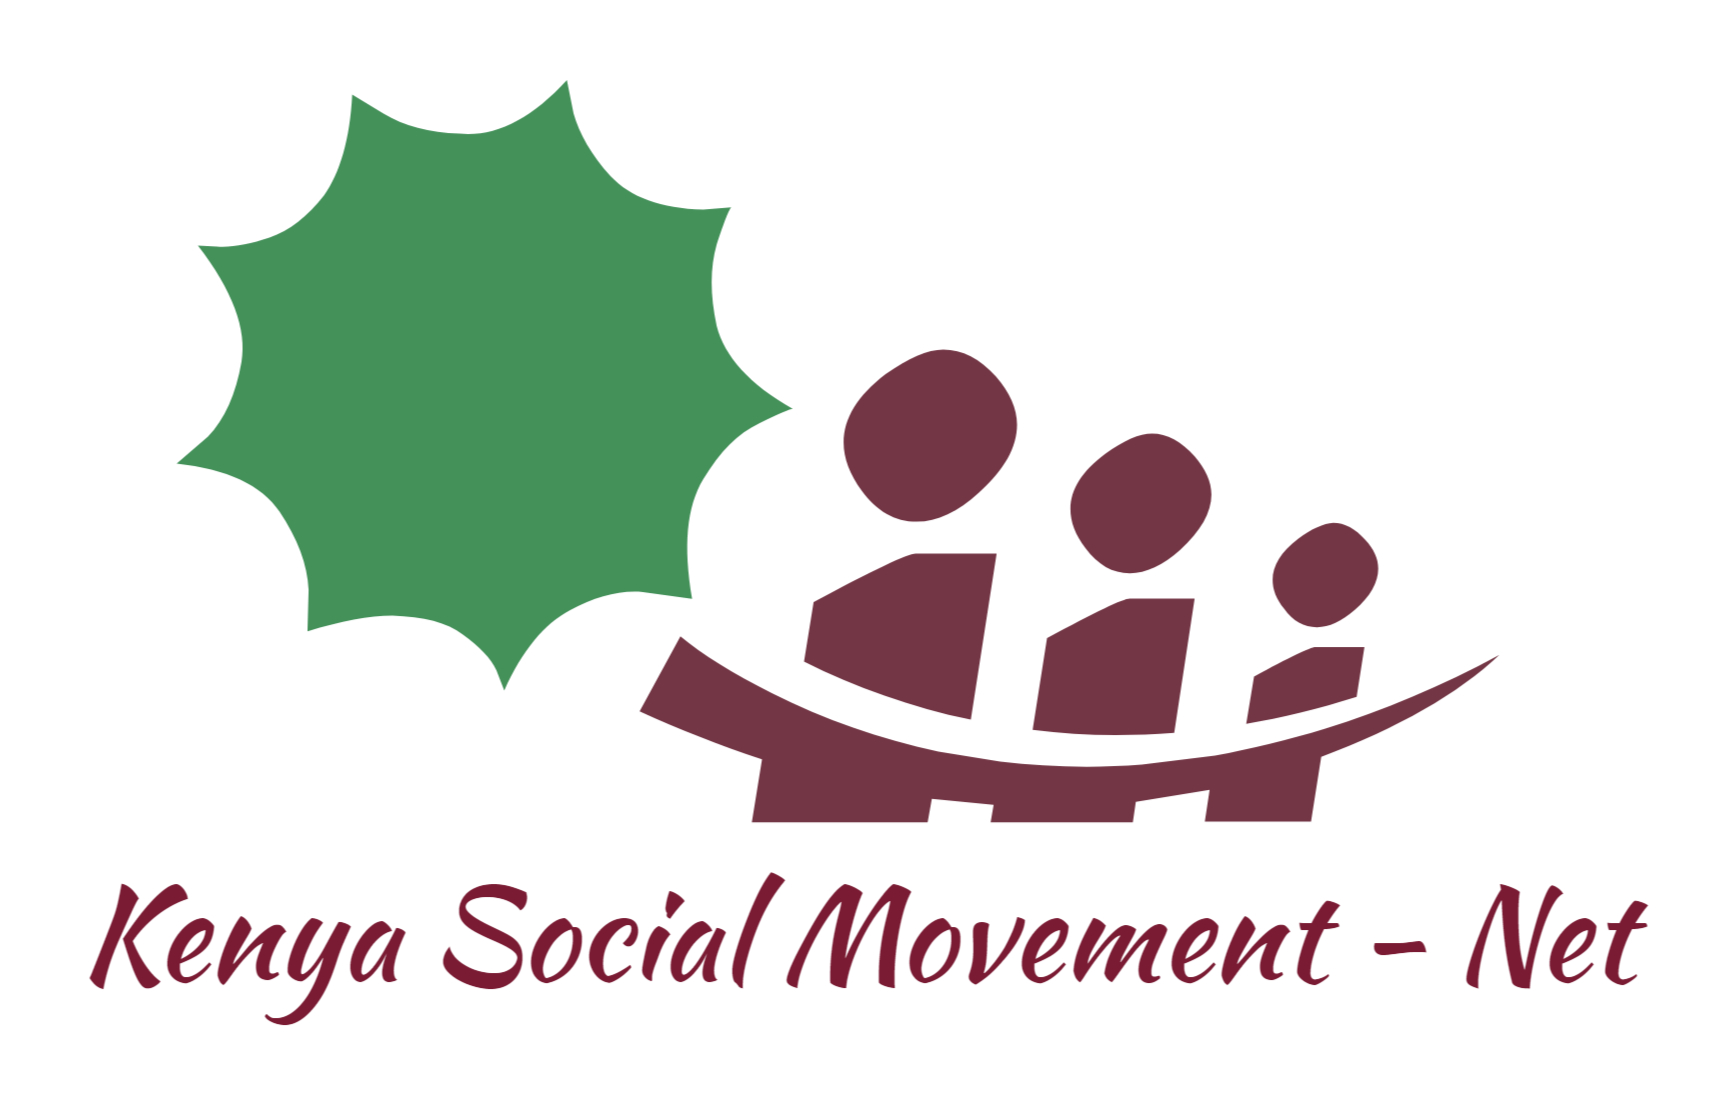 Kenya Social Movement Network